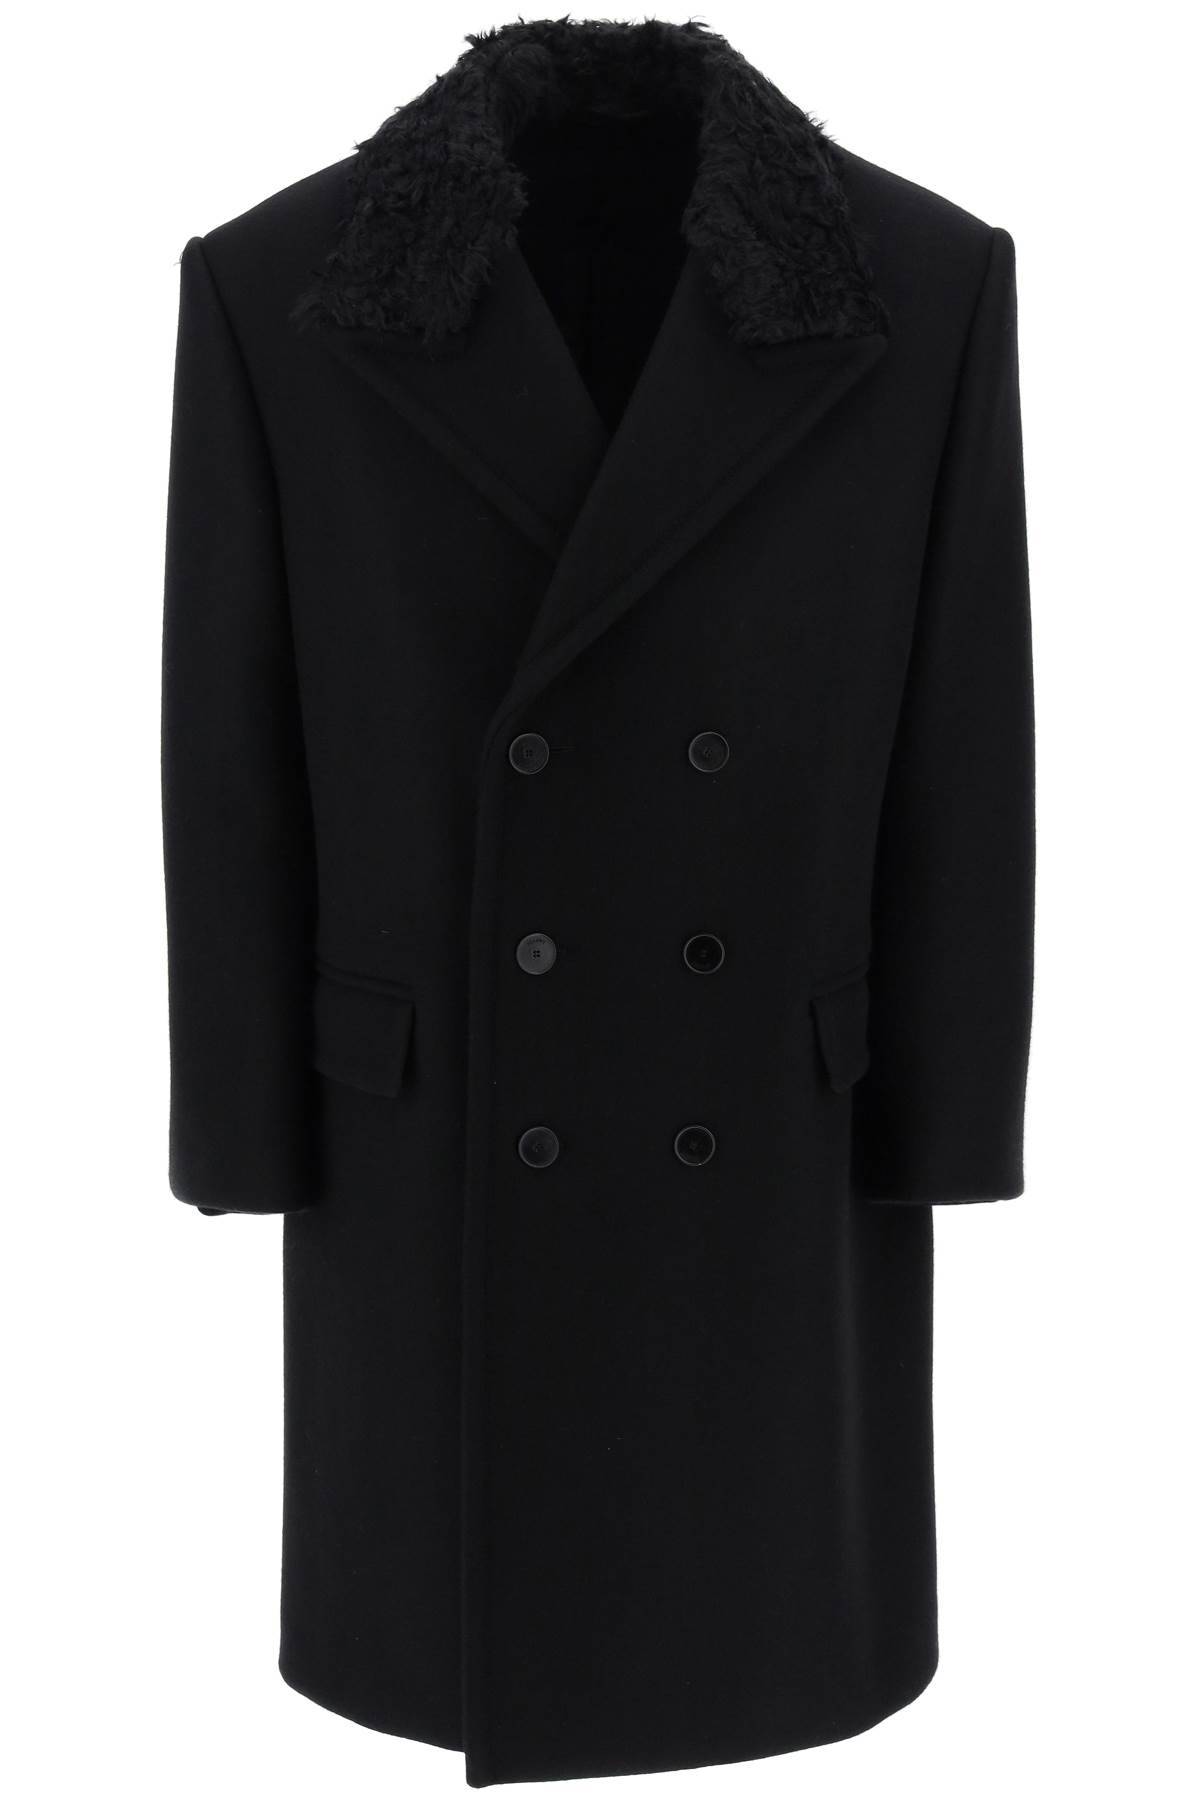 Lanvin LANVIN wool oversize coat